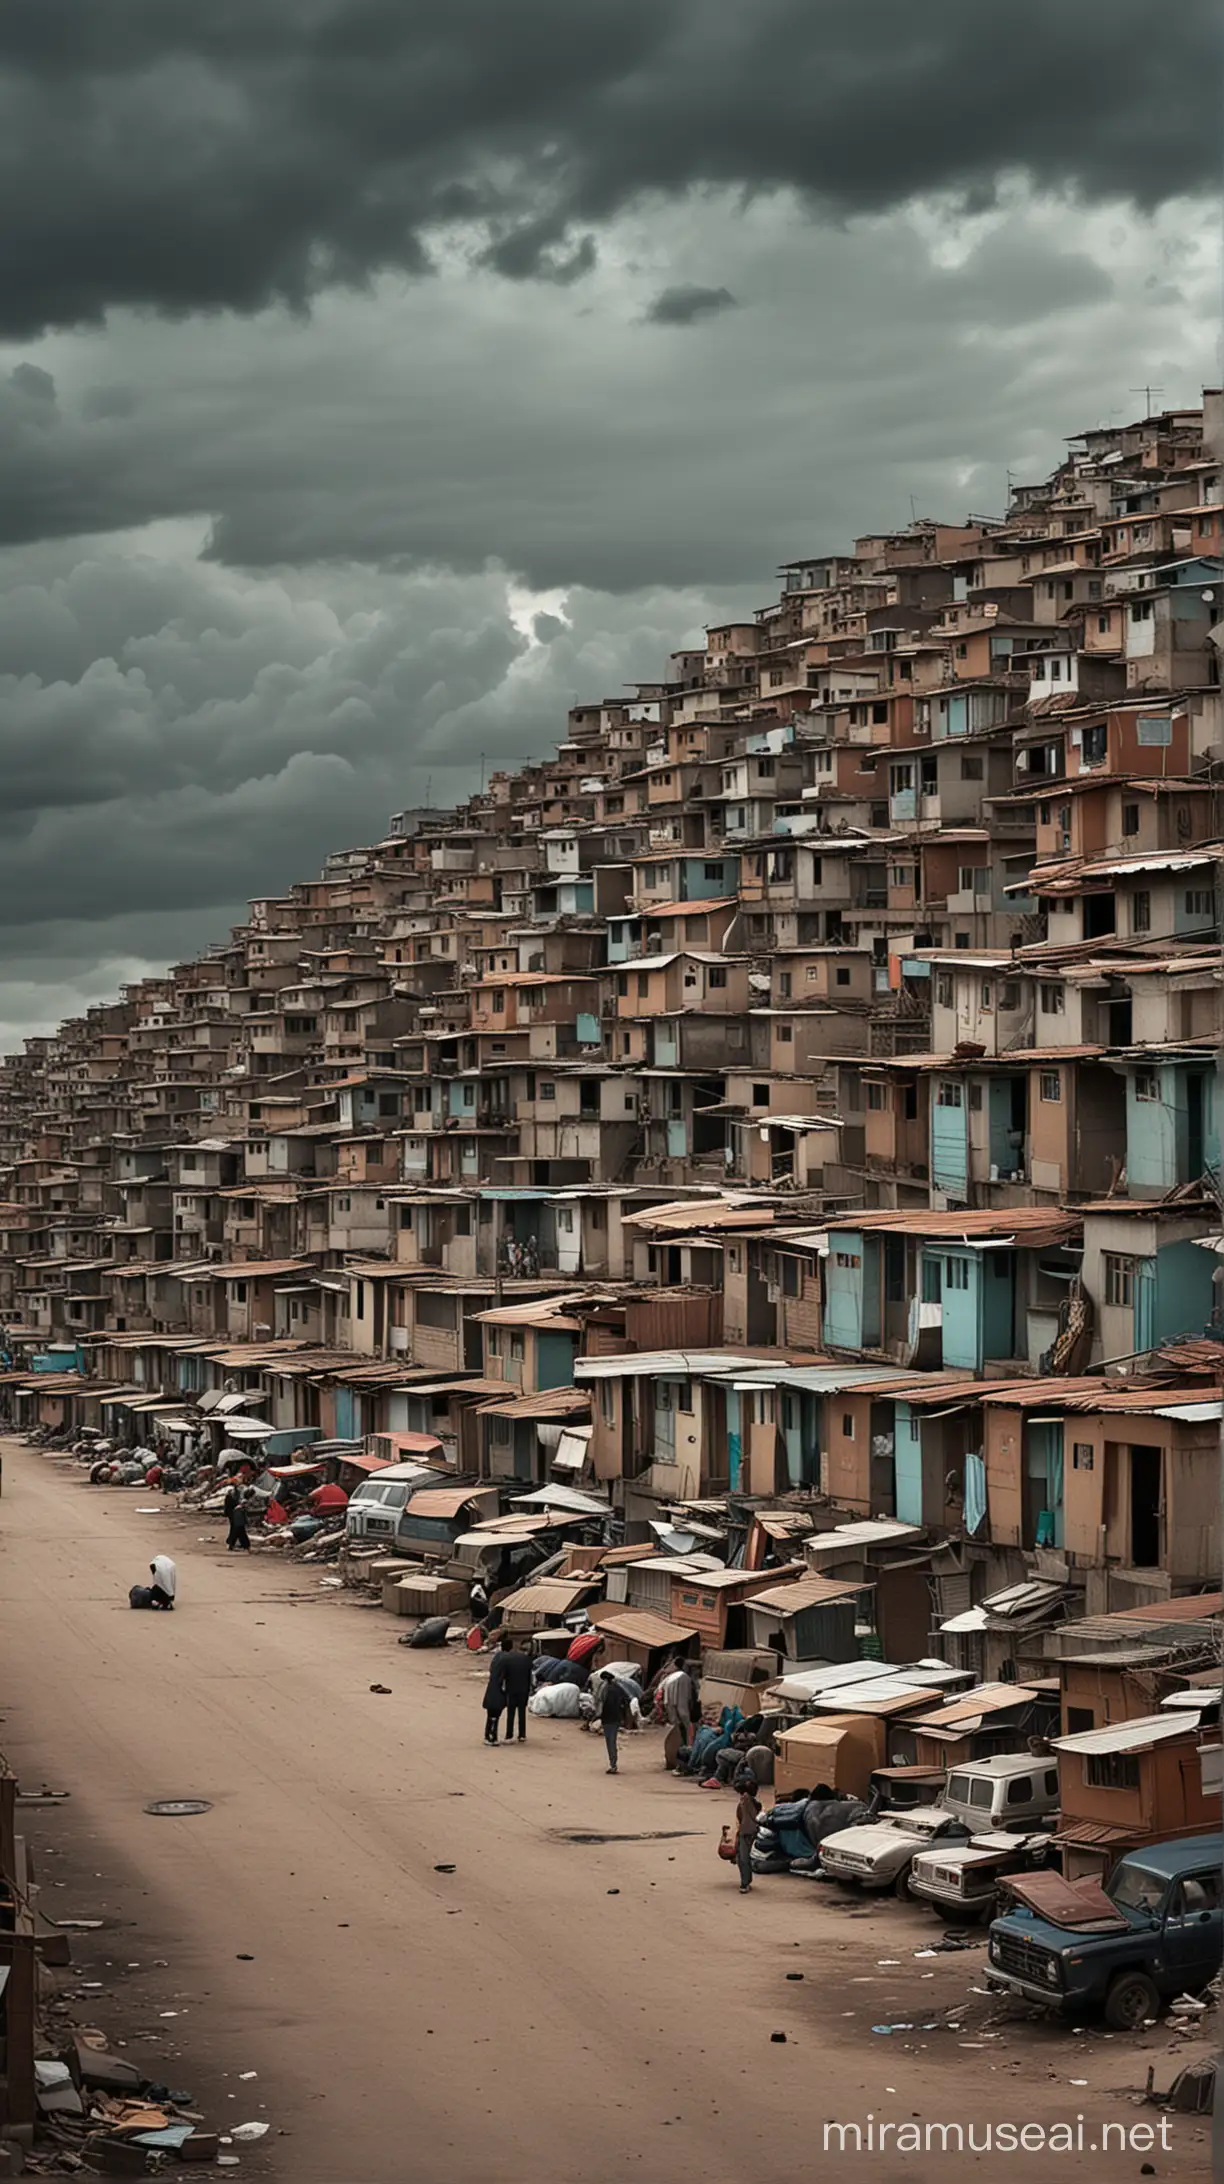 Latin America Housing Crisis Families in Desperation Amid Urban Overcrowding